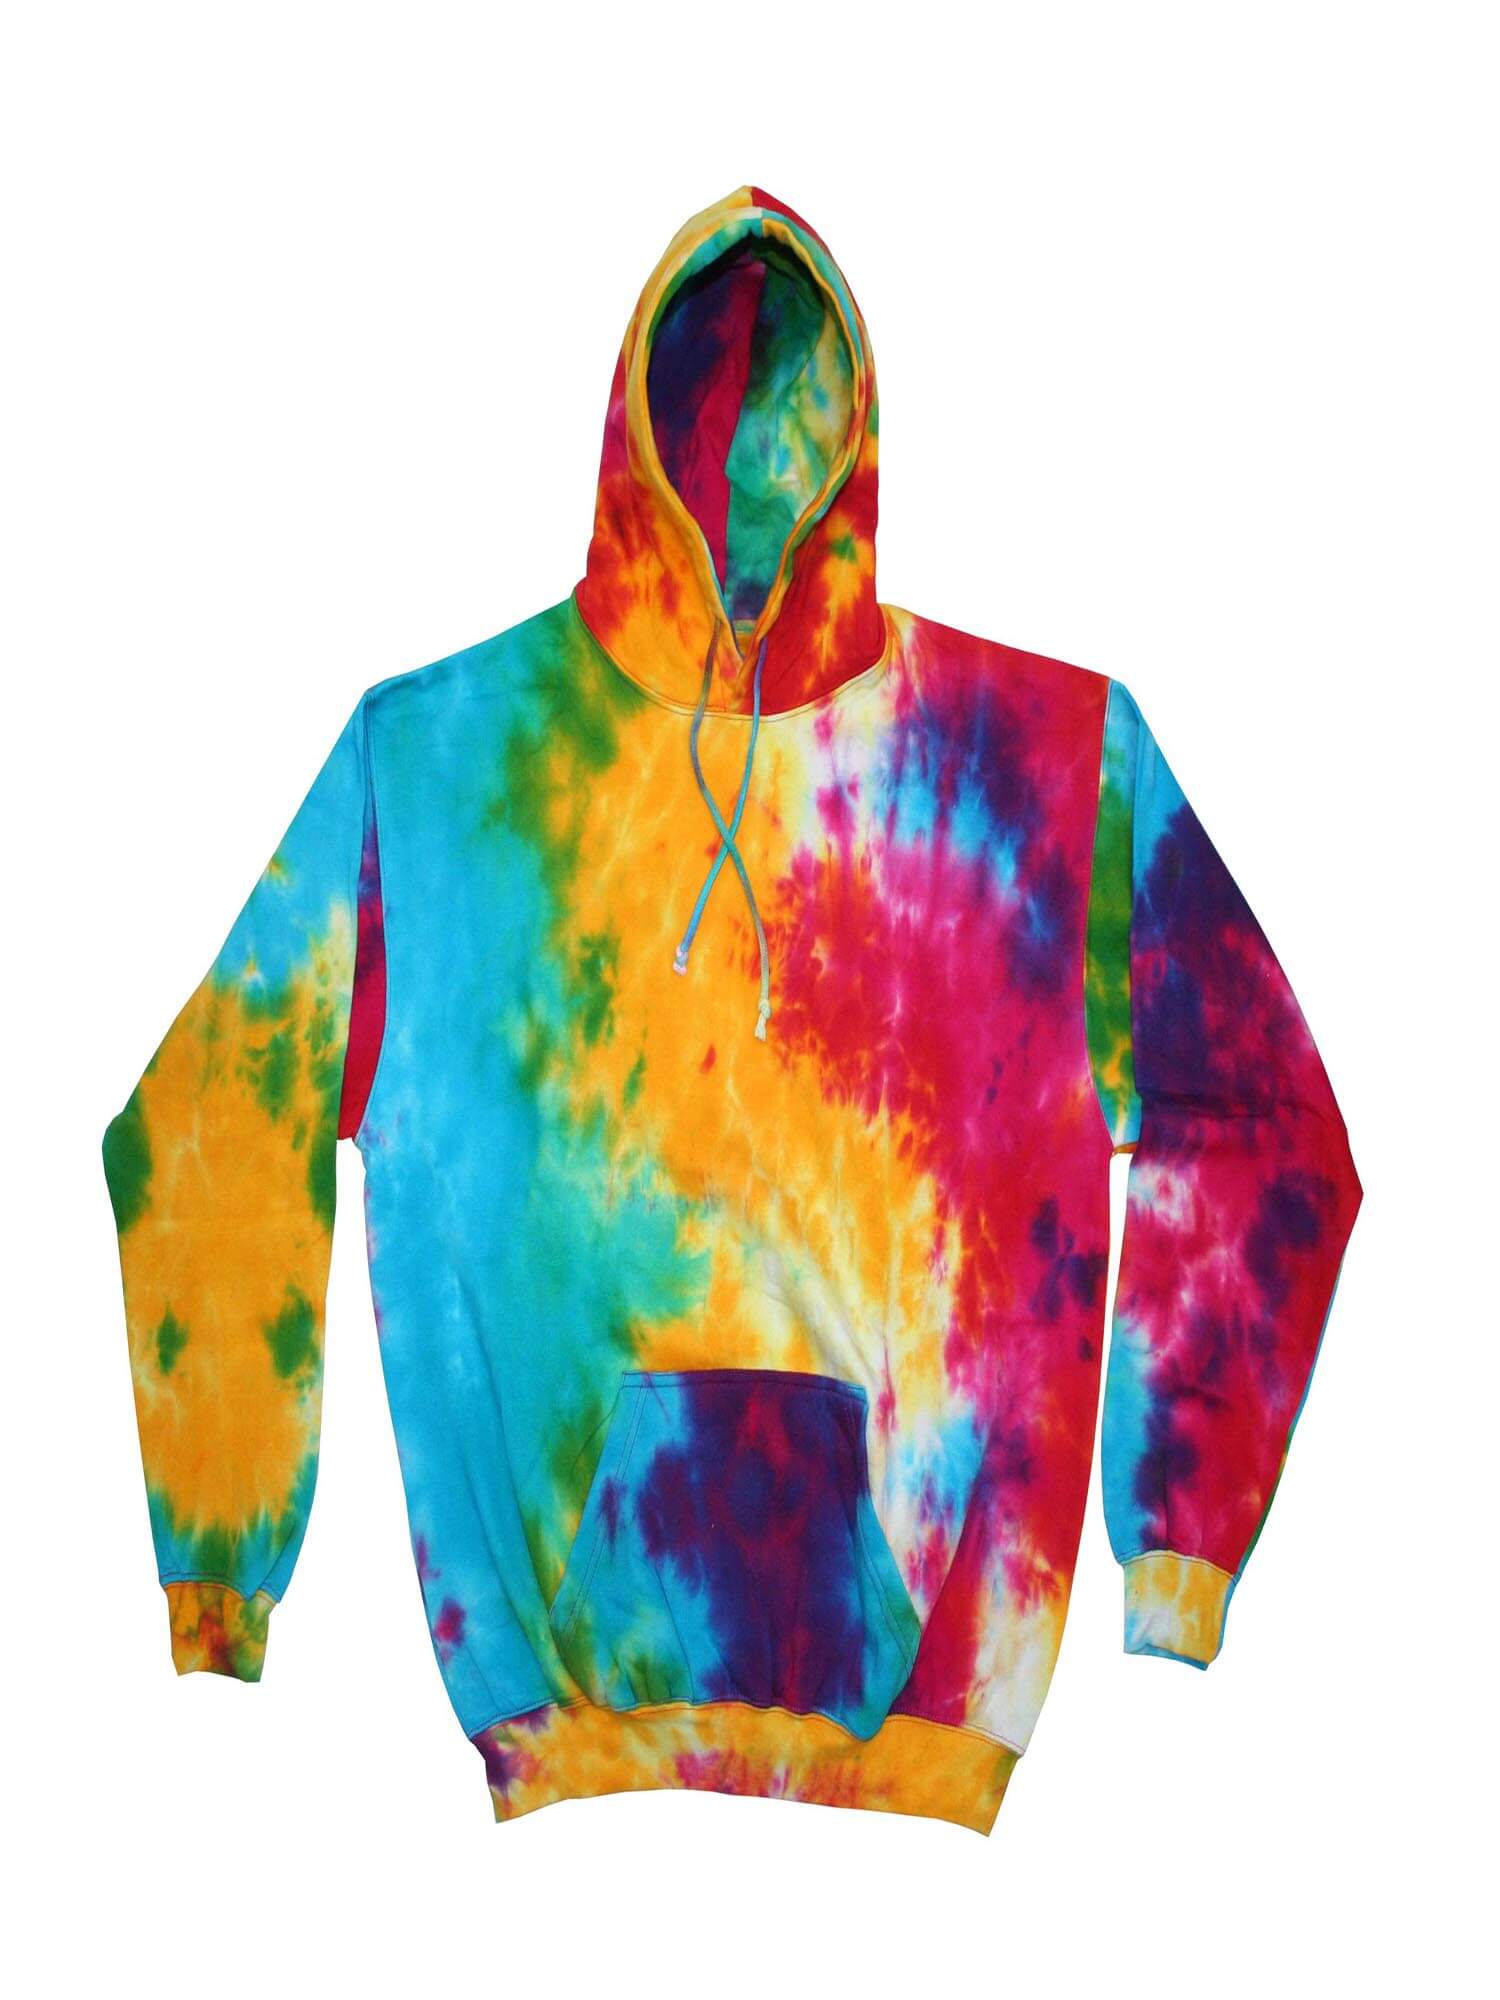 Multi Rainbow Tie-Dye Hoodies Sweatshirts Adult | Zandy's Bargains